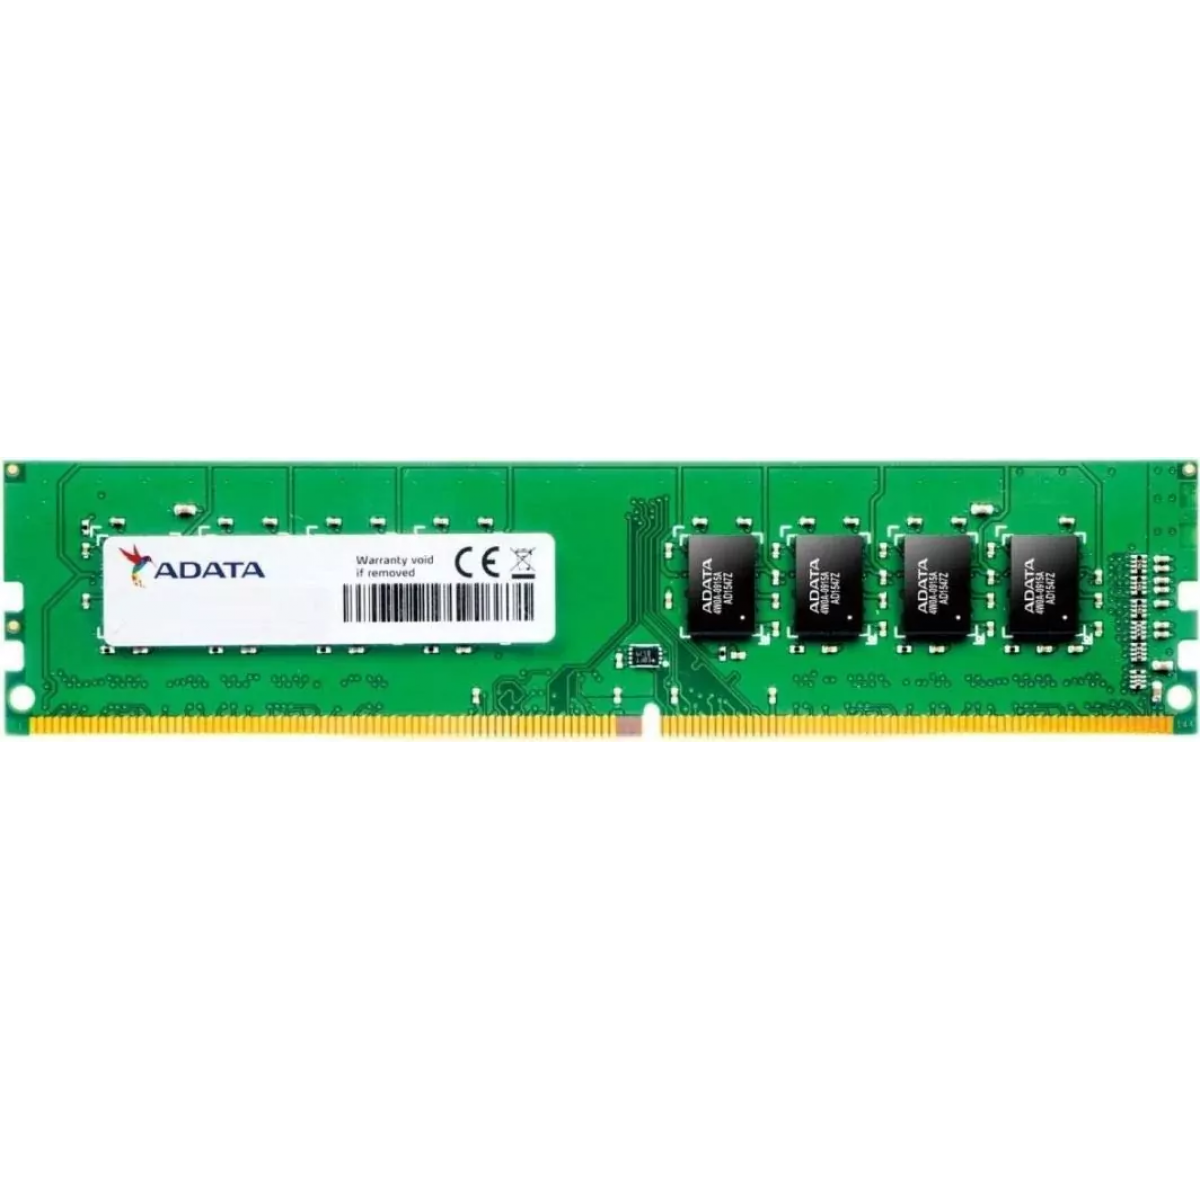 Memória DDR4 Adata, 8GB, 2400MHz, AD4U240038G17-S